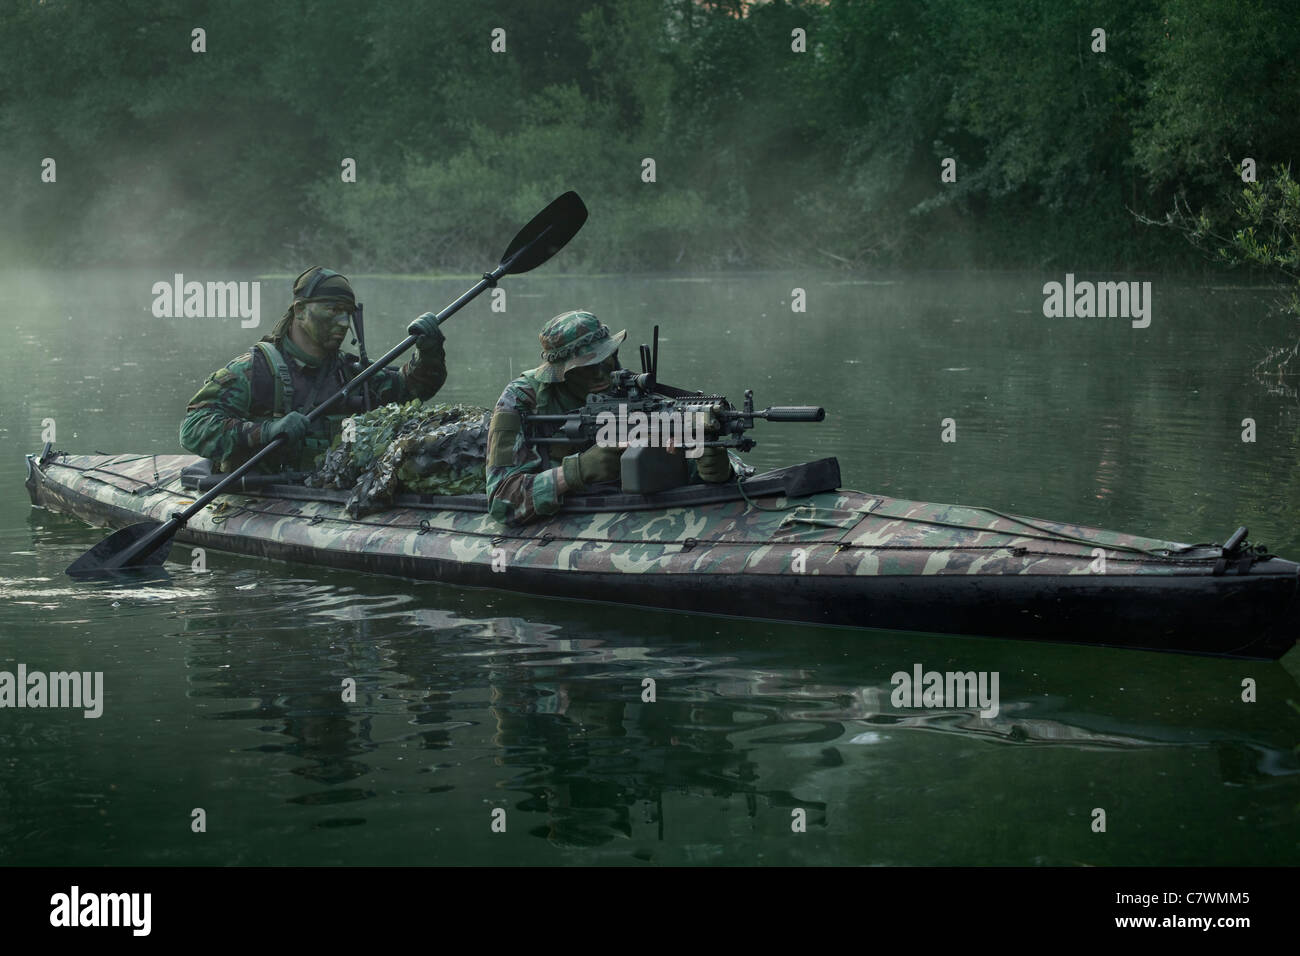 navy-seals-navigate-the-waters-in-a-folding-kayak-during-jungle-warfare-C7WMM5.jpg